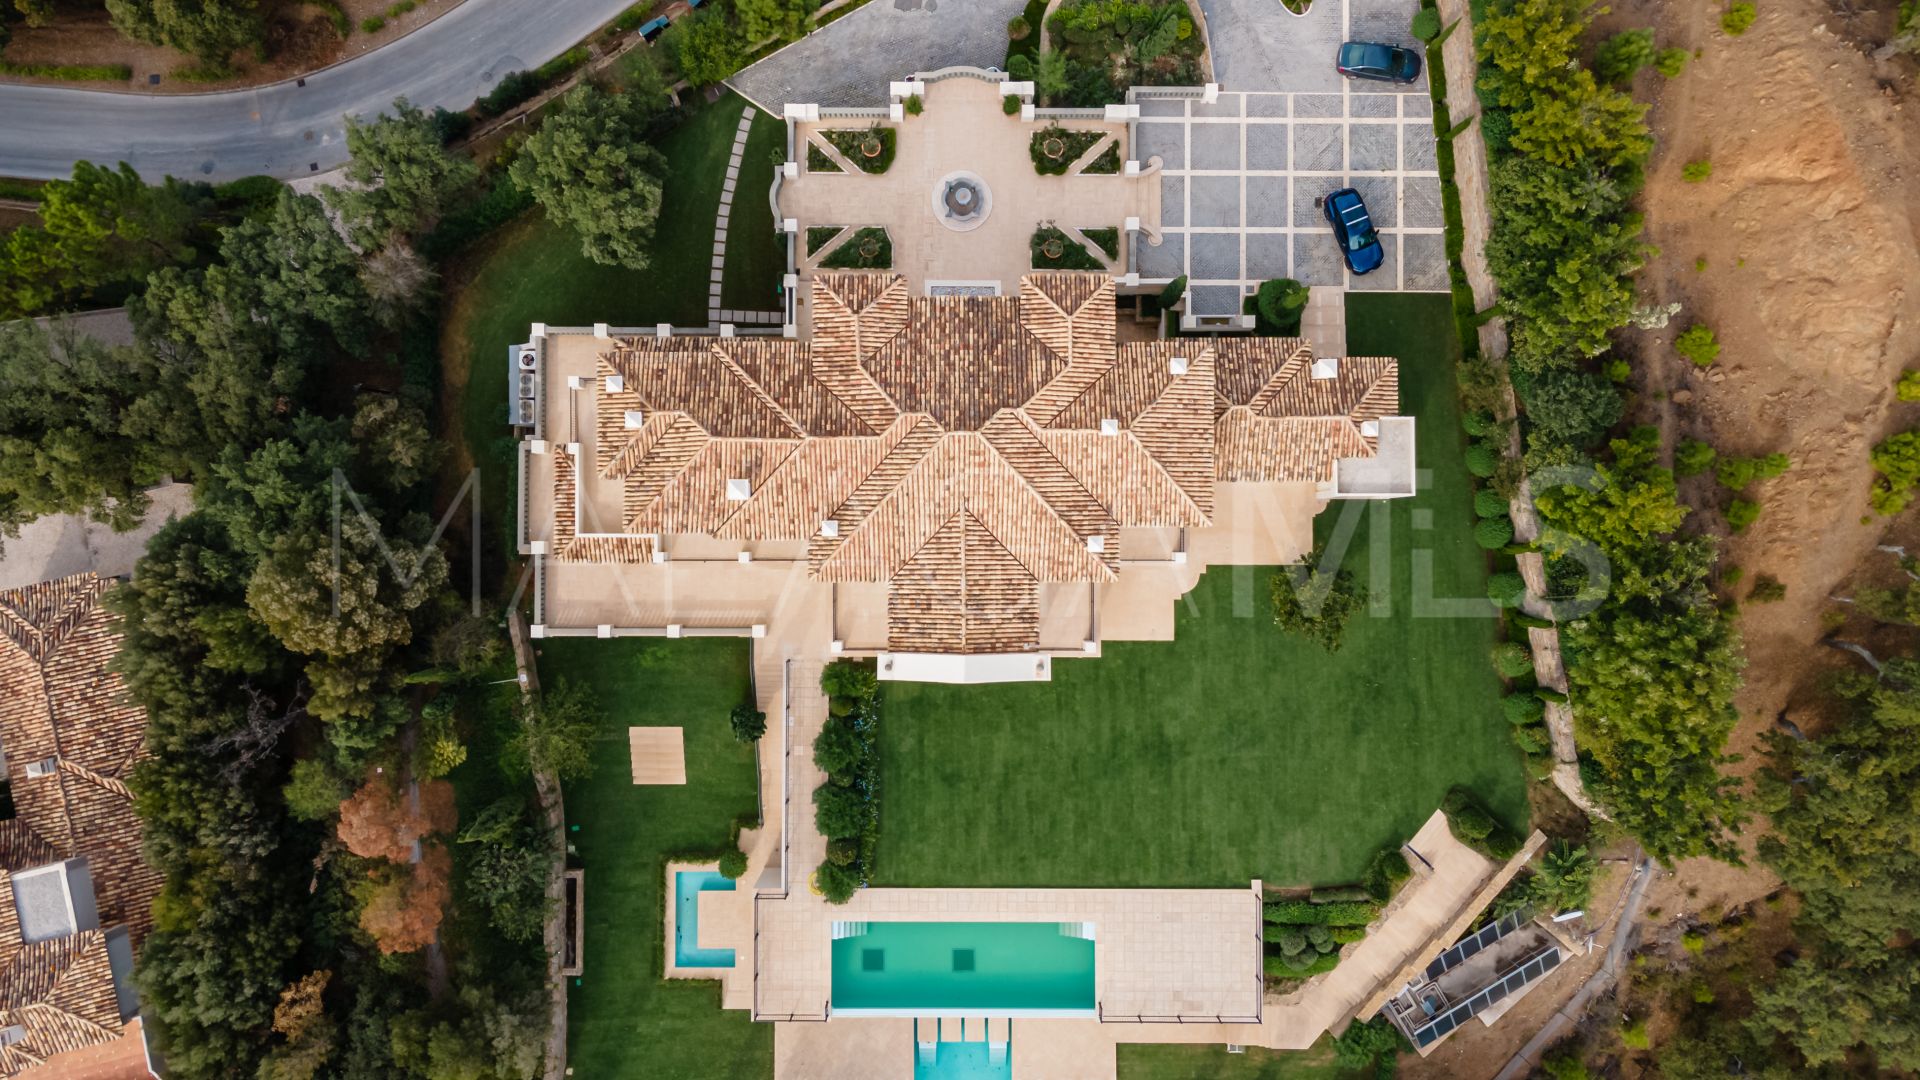 For sale villa in La Zagaleta with 9 bedrooms